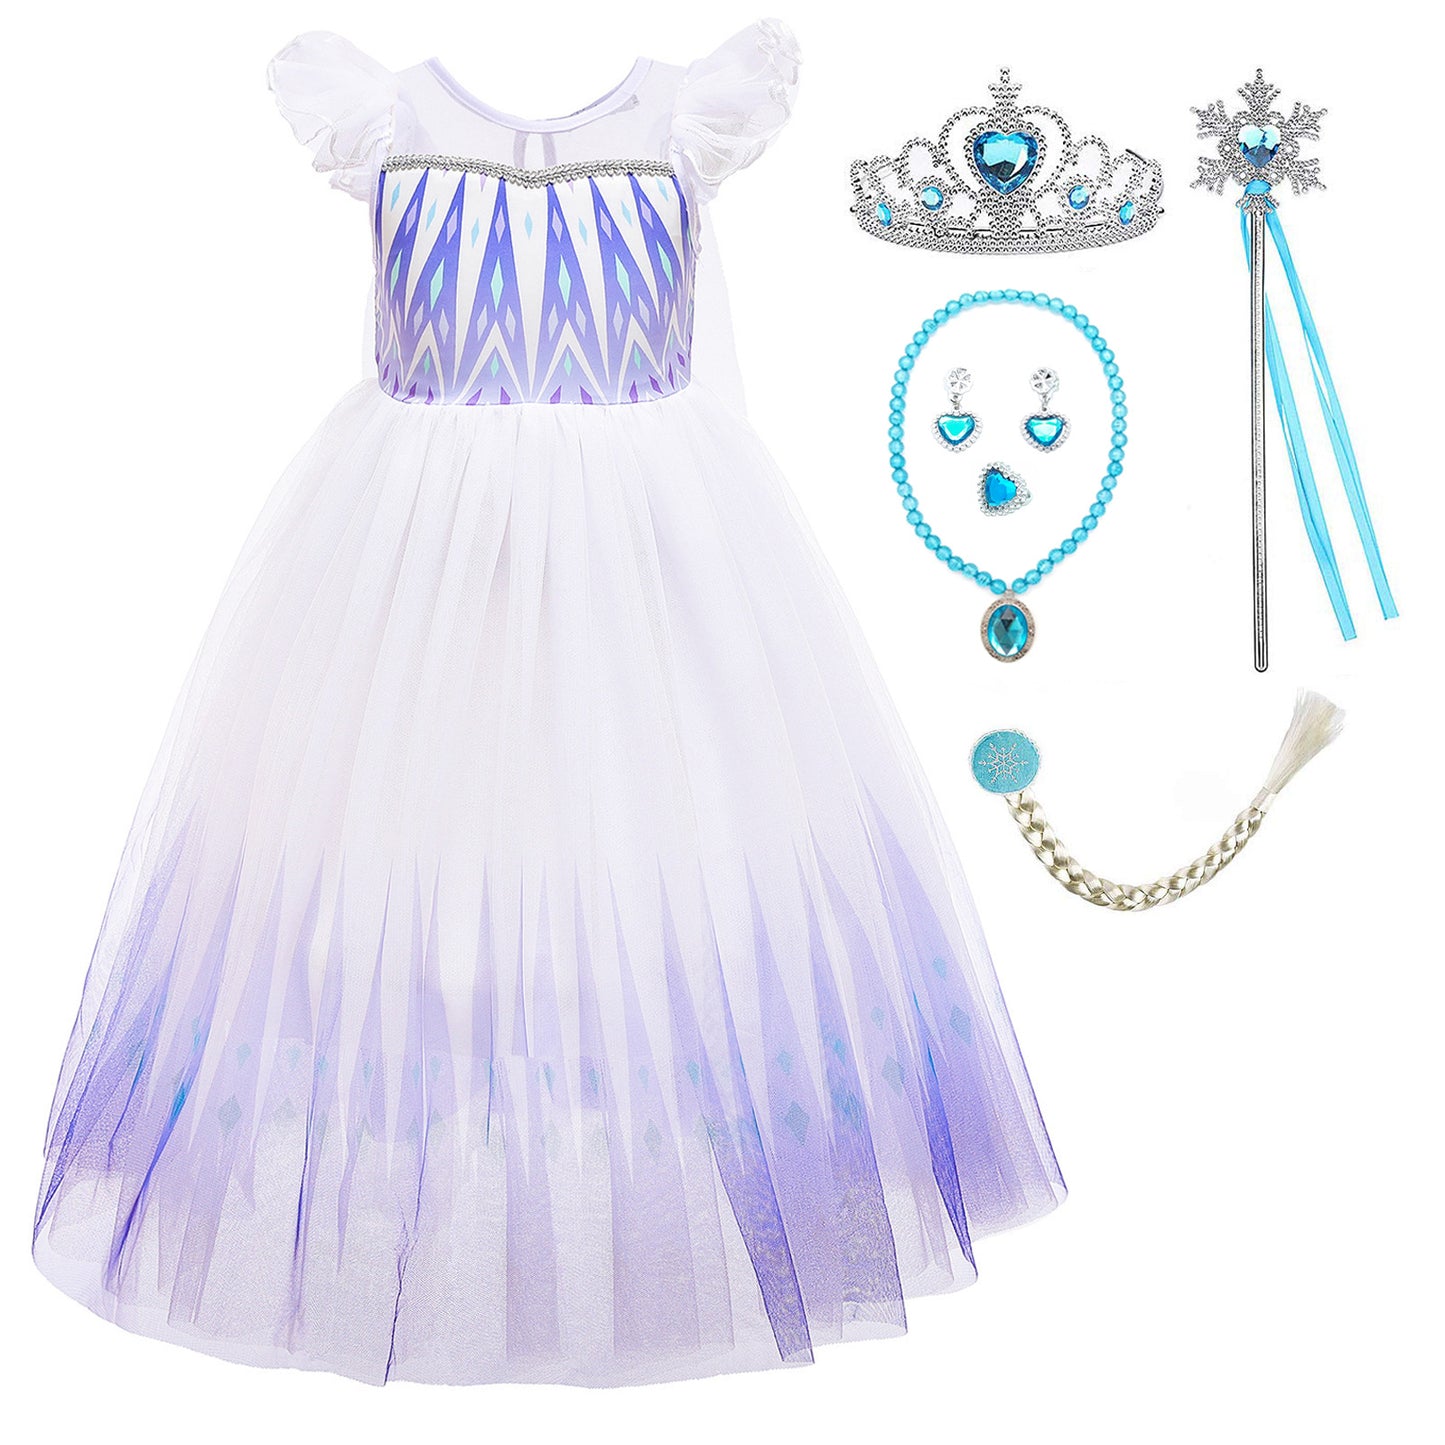 Frozen Elsa Costume with Accessories